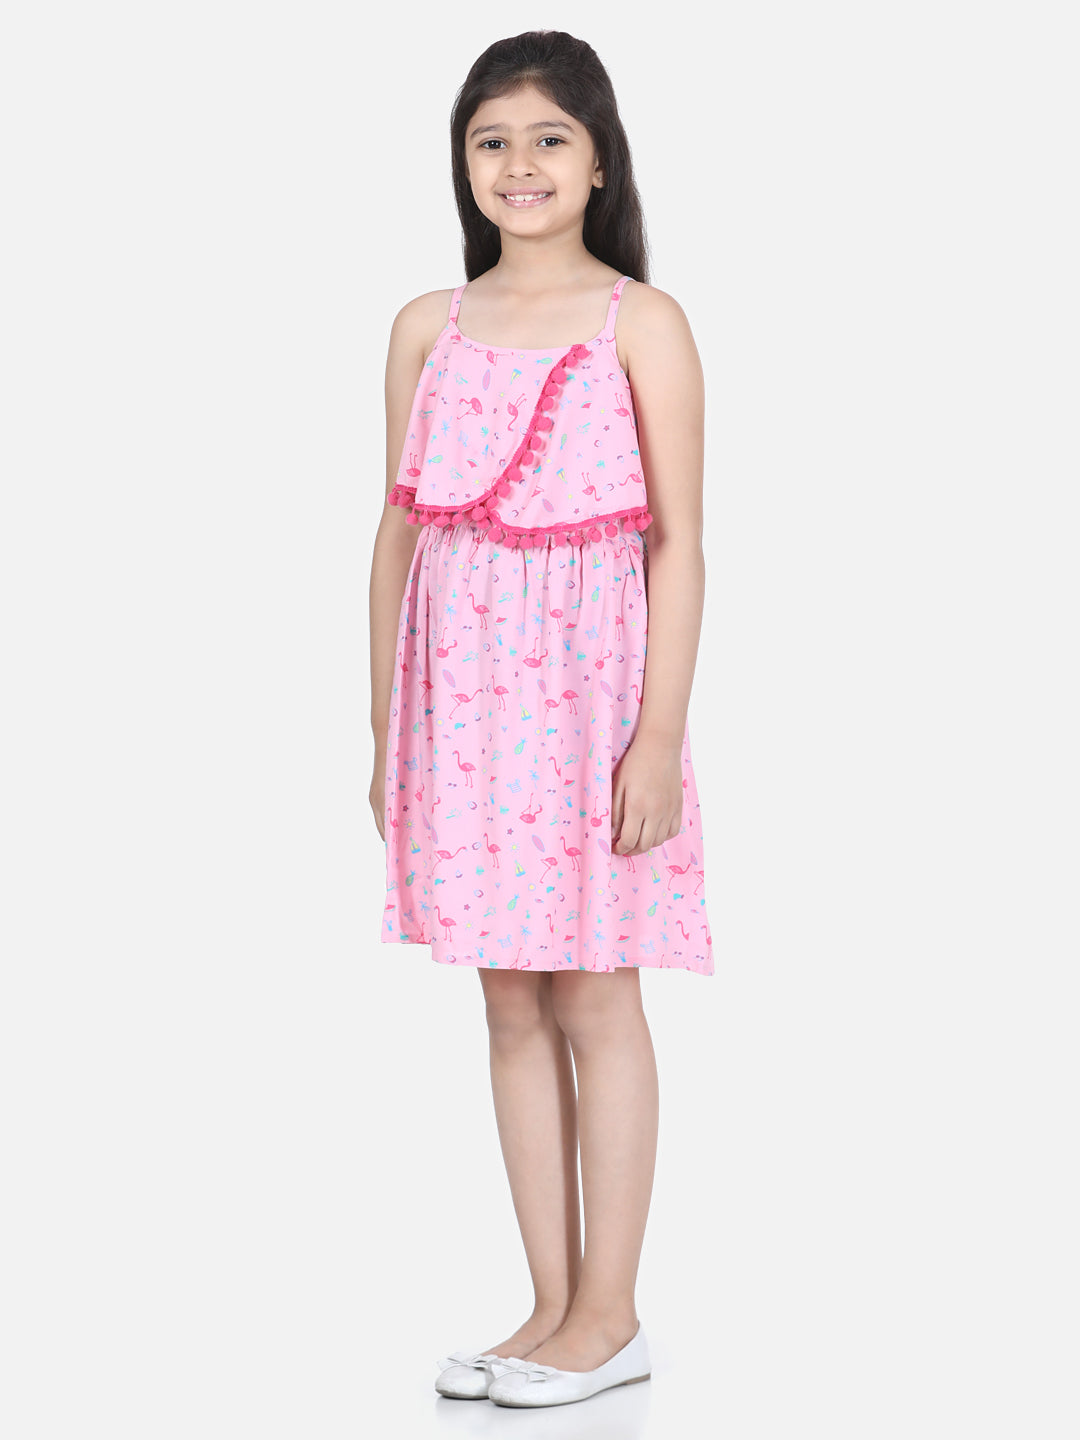 Girls Pink Flamingo Printed Dress with Pom Pom Details